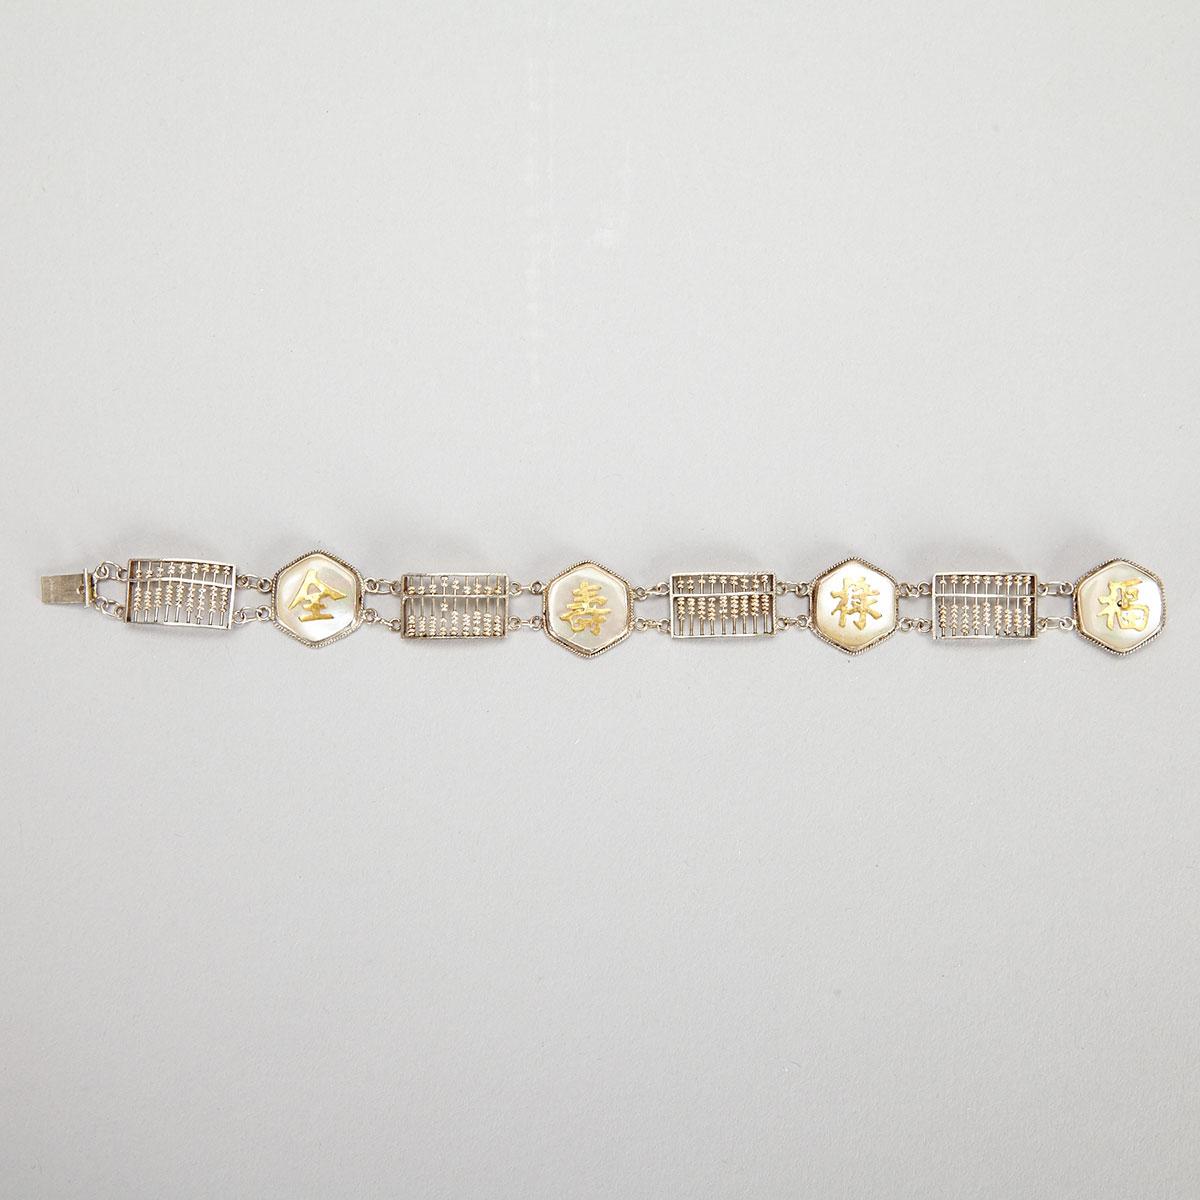 Export Silver ‘Fu Lu Shou’ Bracelet, Early 20th Century